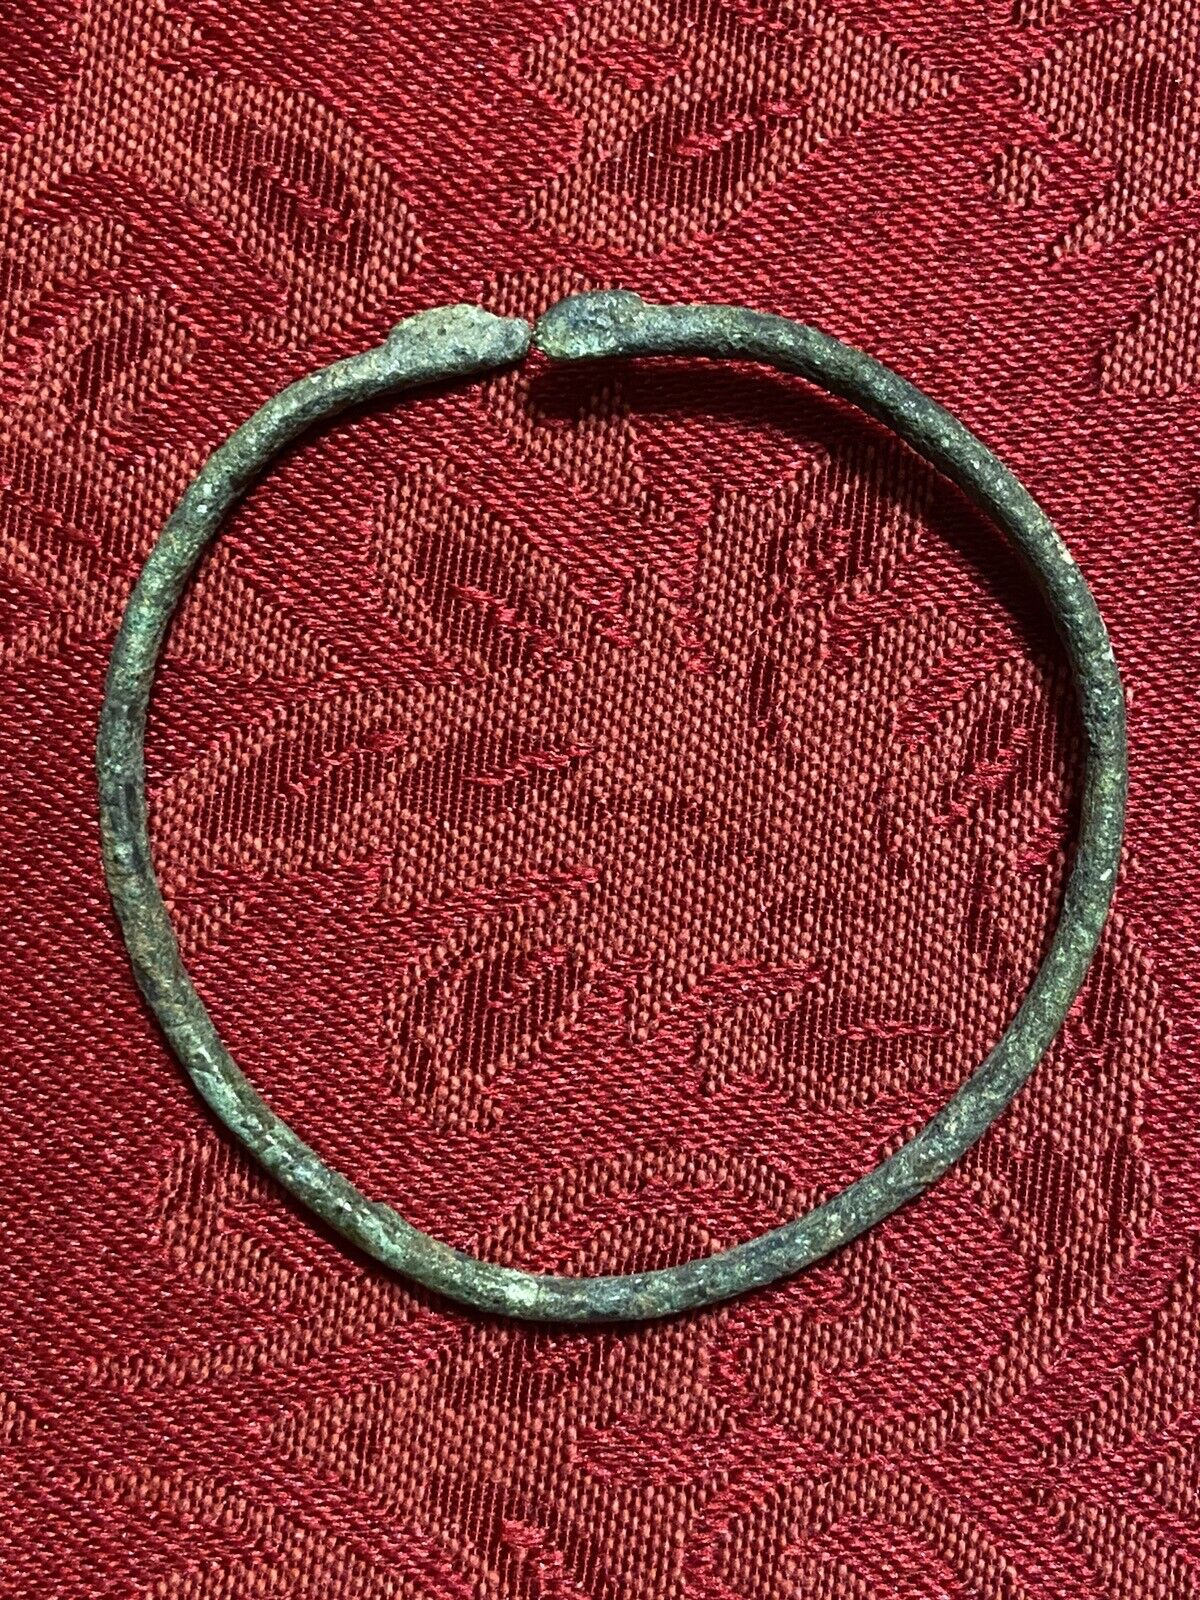 Genuine, Ancient, Bronze Bracelet.  Charming.